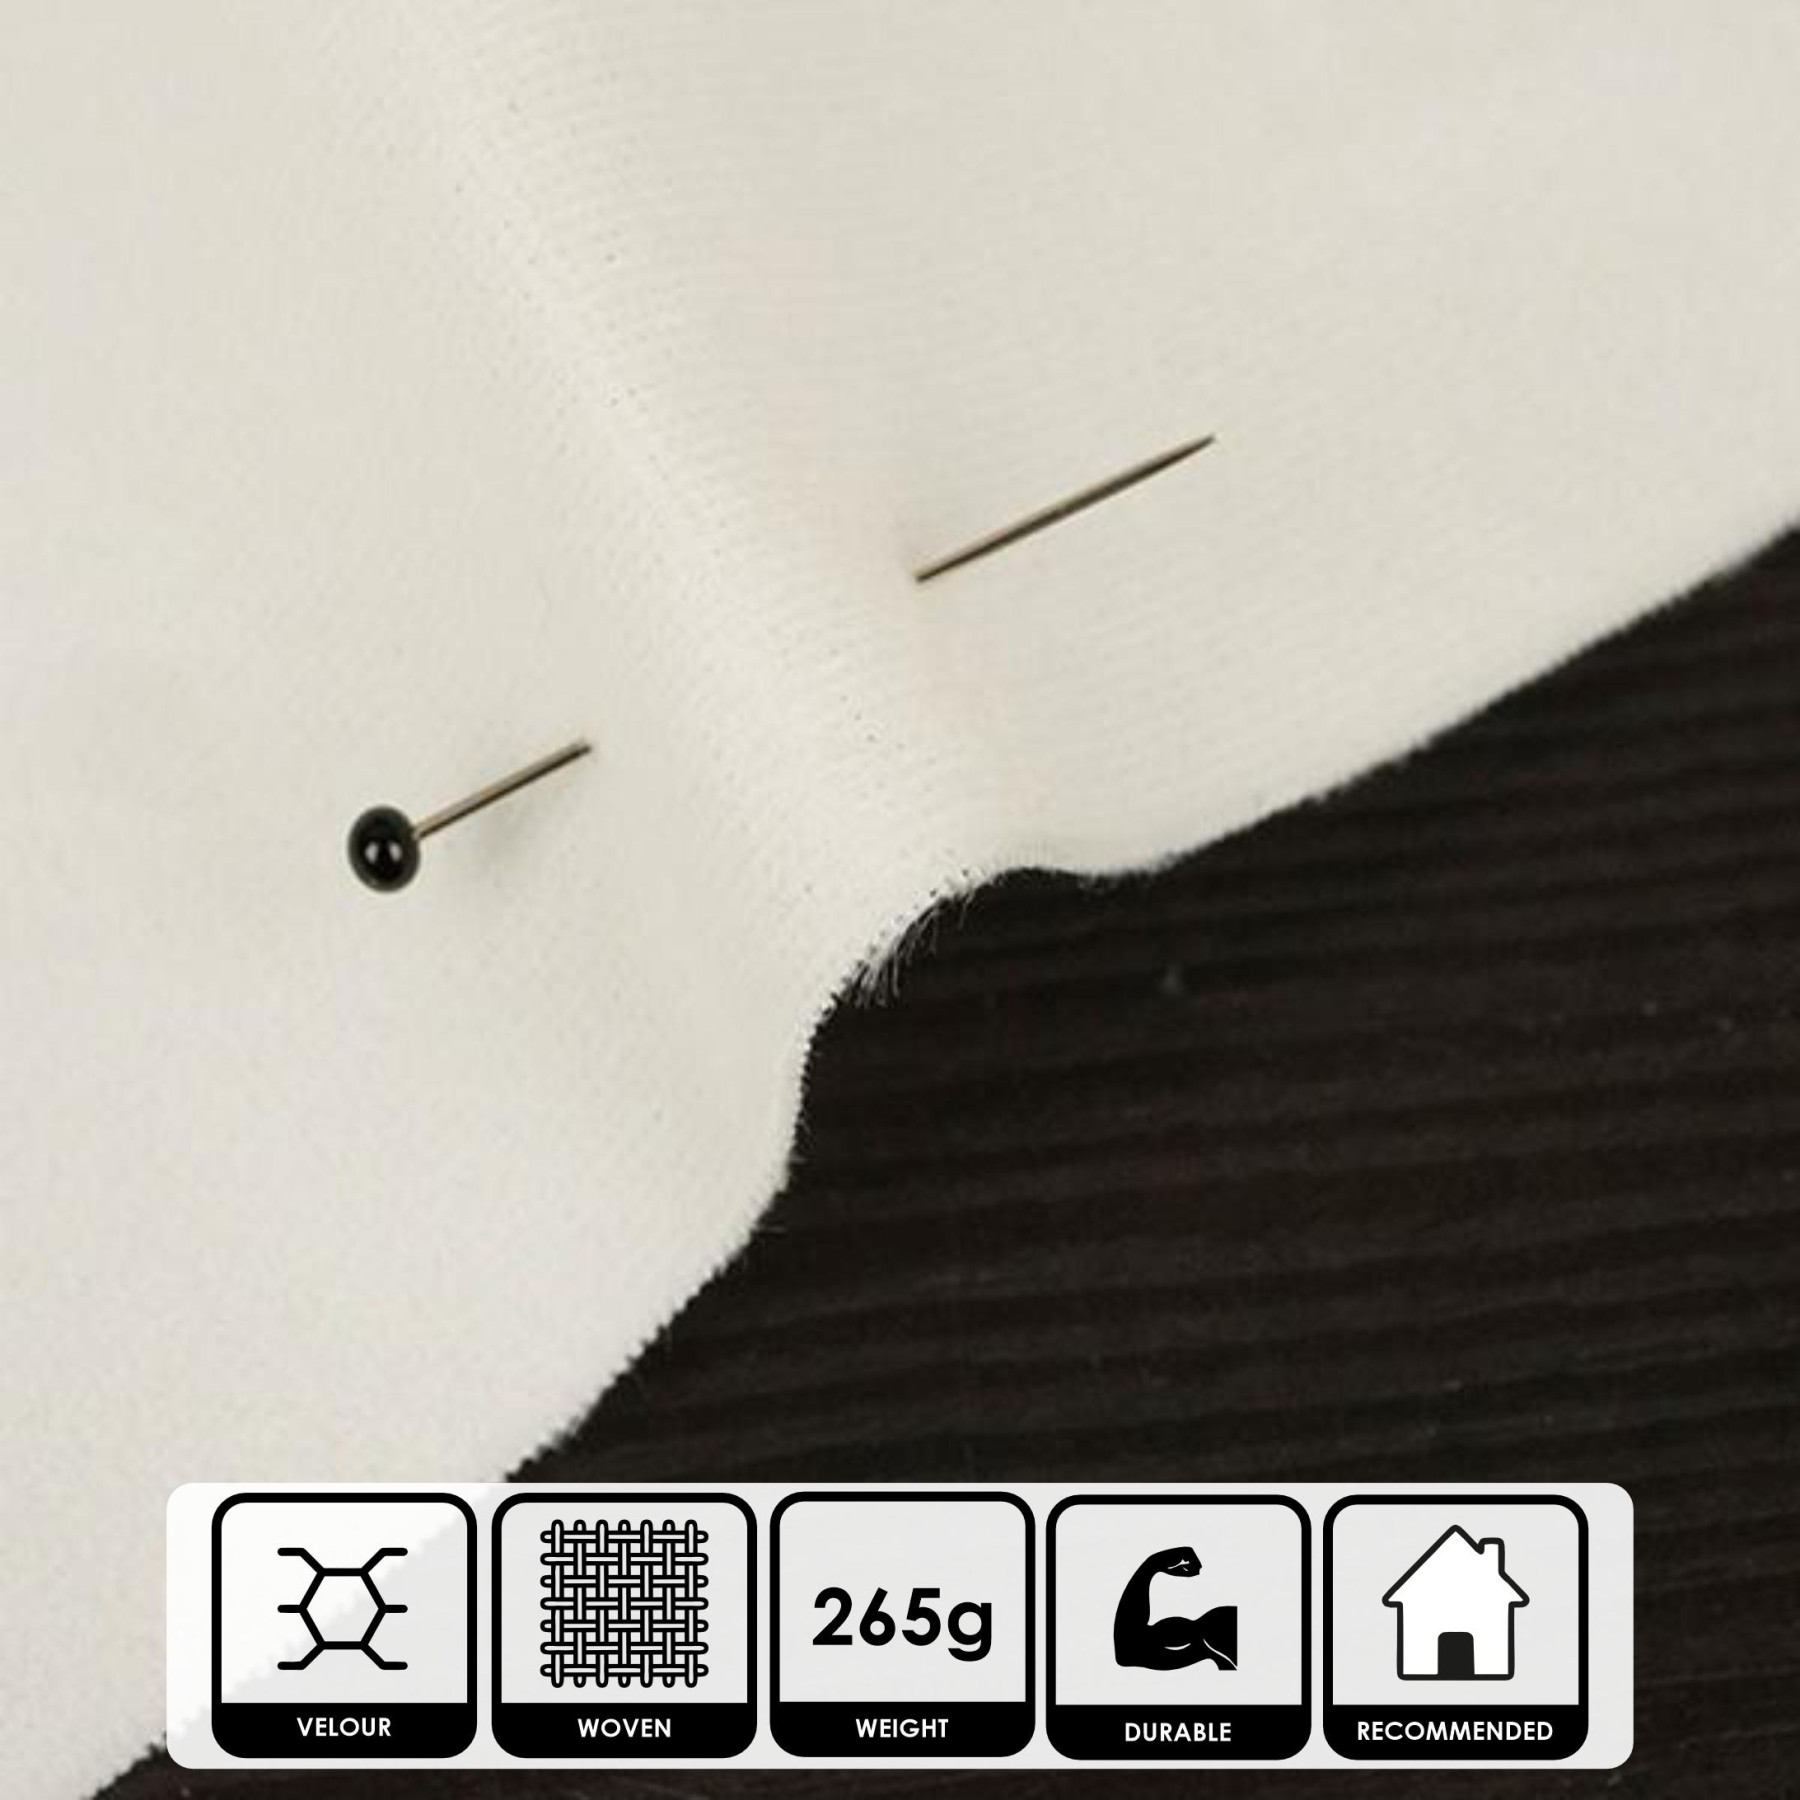 NECK PILLOW - IMITATION COLORFUL SWEATER pat. 1 - sewing set